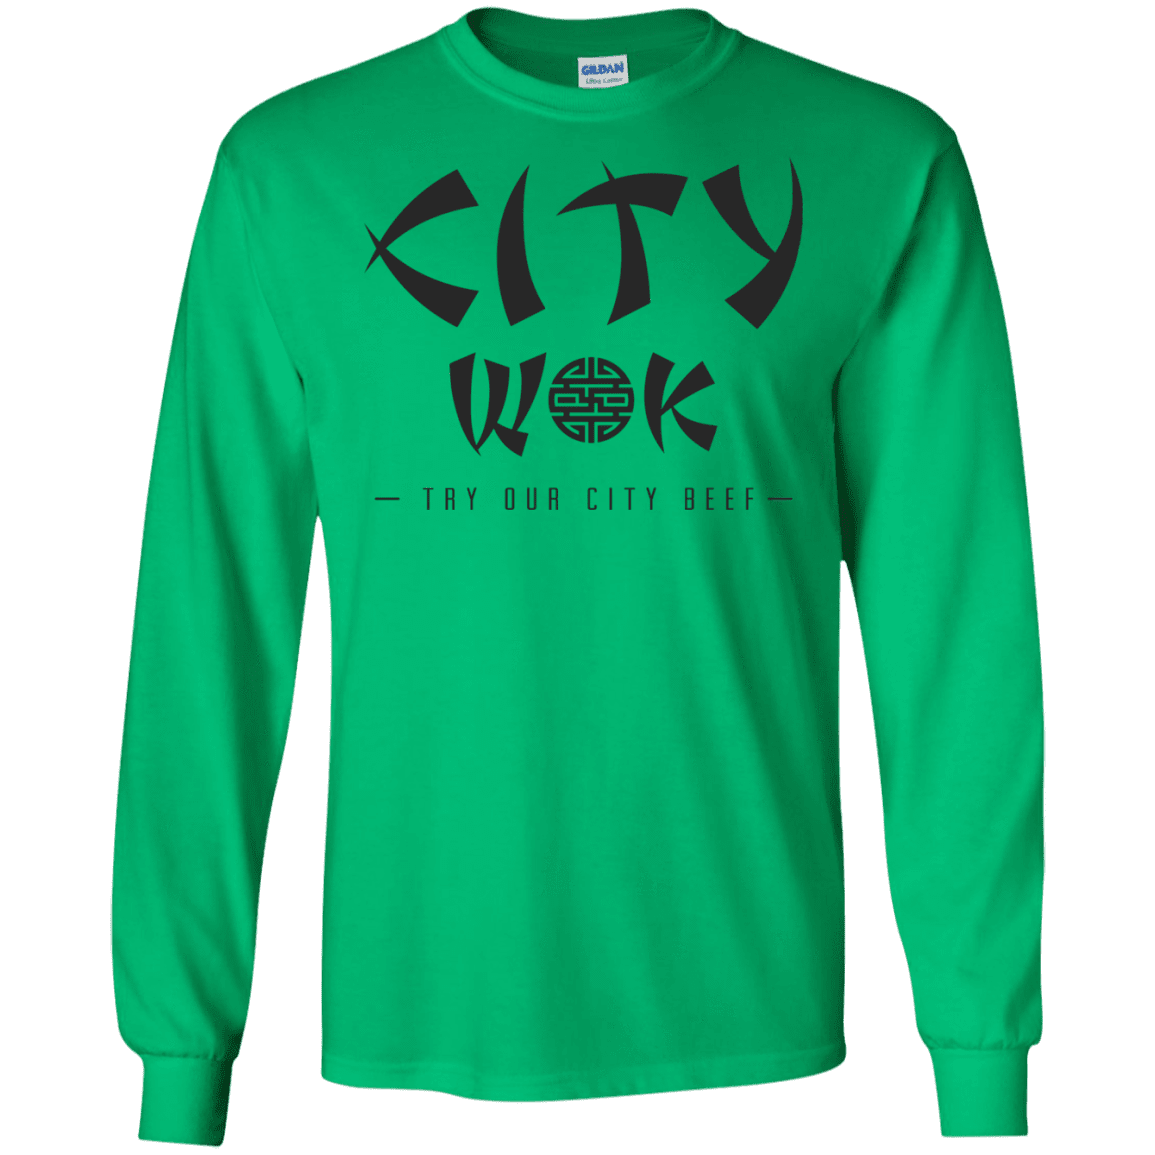 T-Shirts Irish Green / S City Wok Men's Long Sleeve T-Shirt